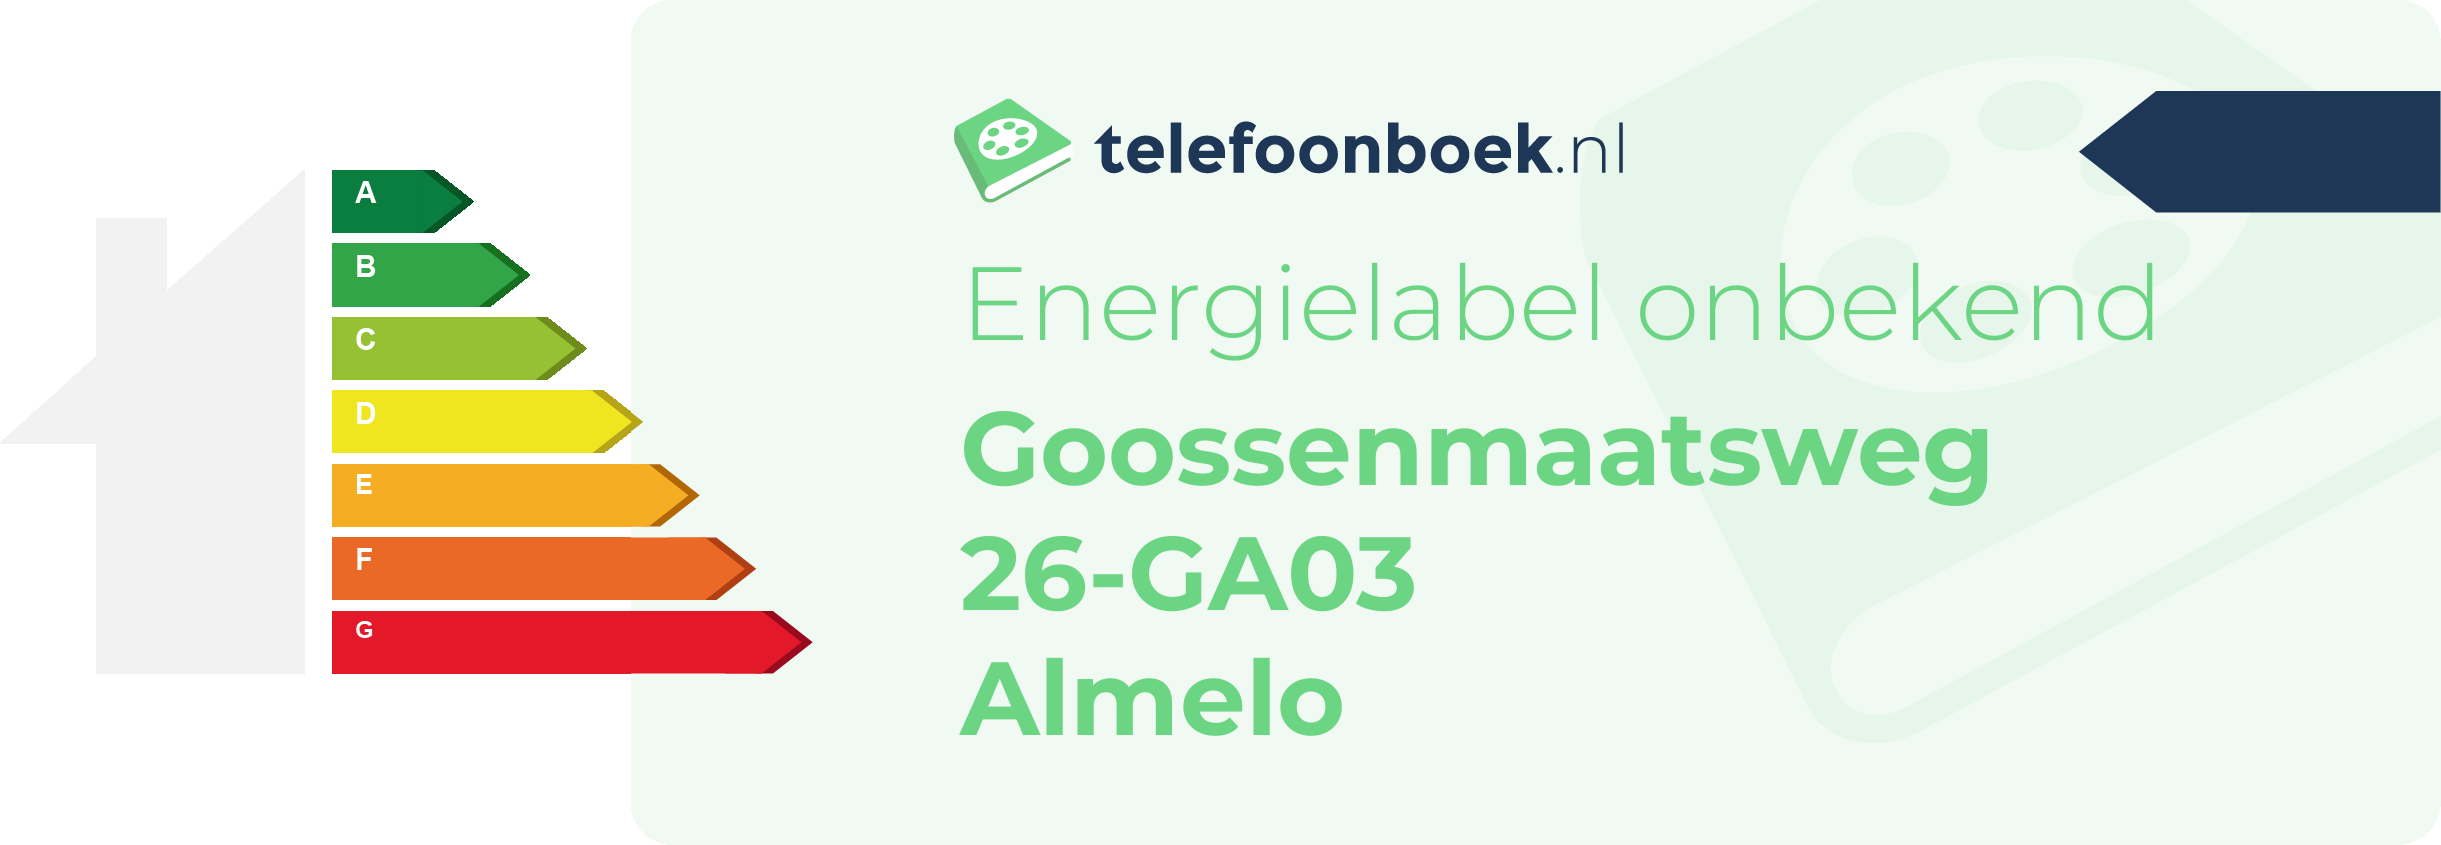 Energielabel Goossenmaatsweg 26-GA03 Almelo